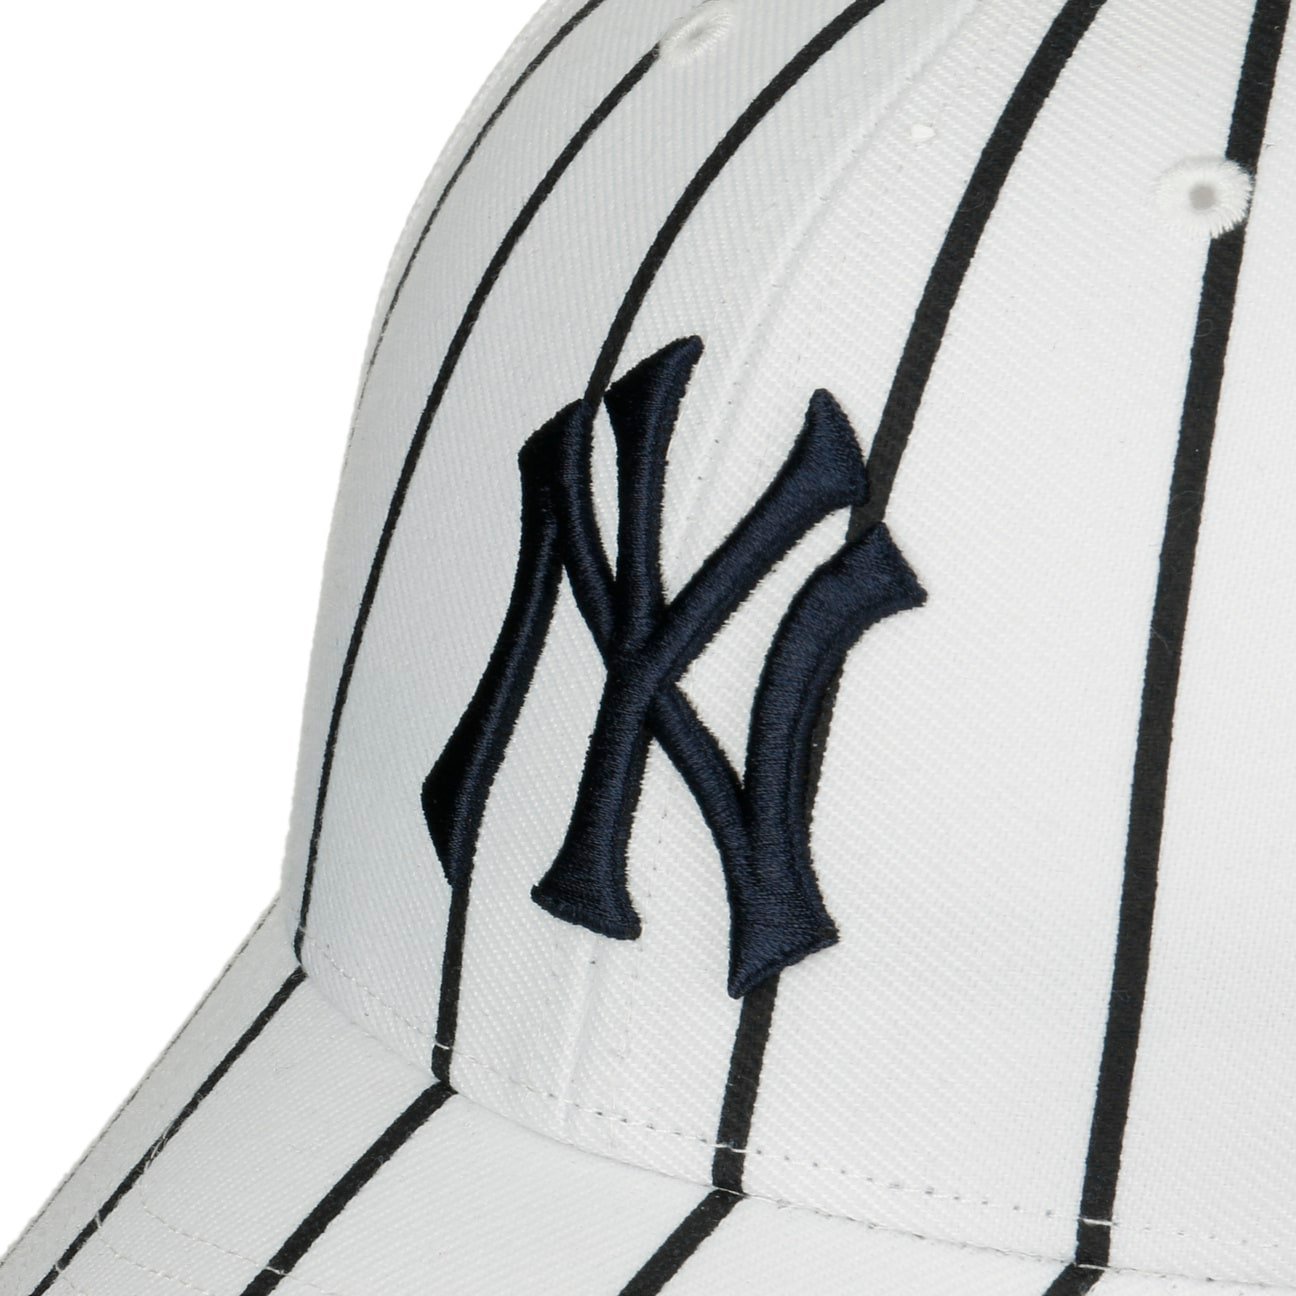 47 Brand Curved Brim New York Yankees MLB MVP Black Snapback Cap